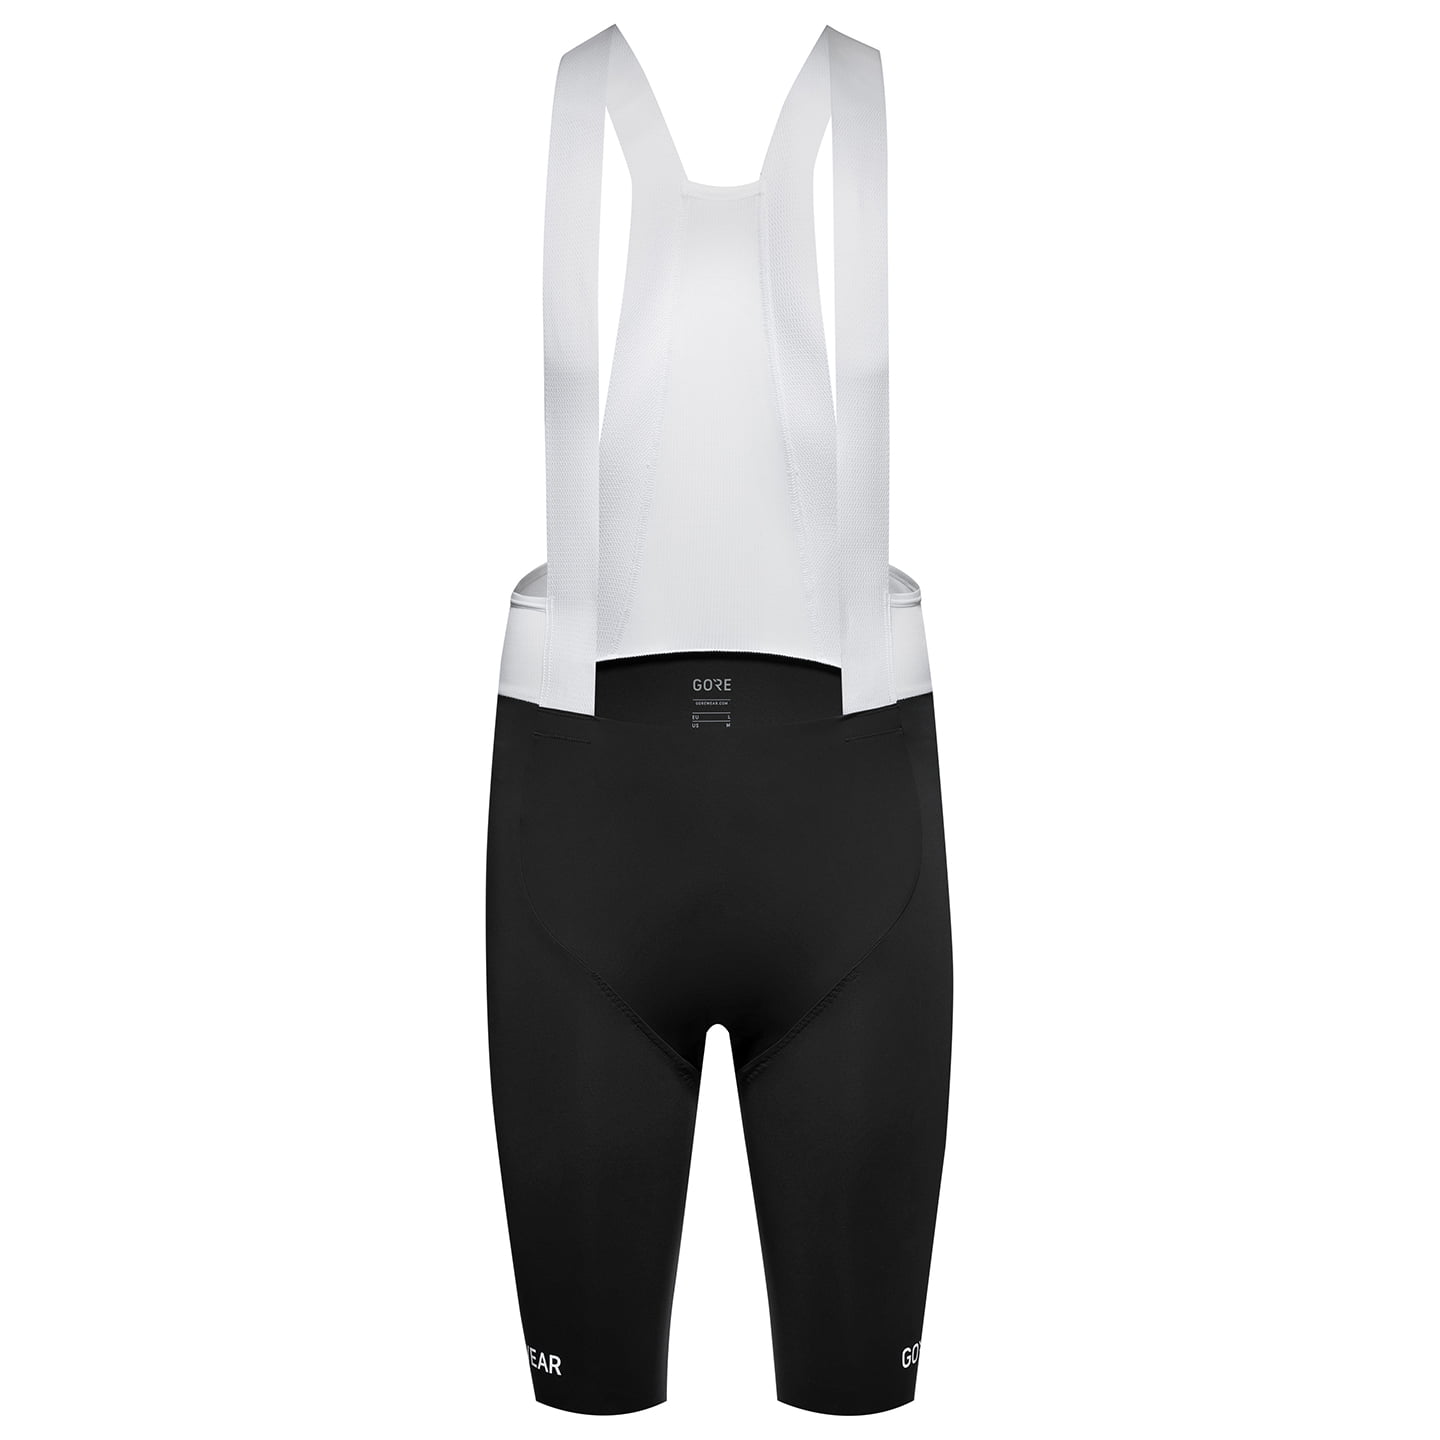 Spinshift Bib Shorts Bib Shorts, for men, size M, Cycle shorts, Cycling clothing